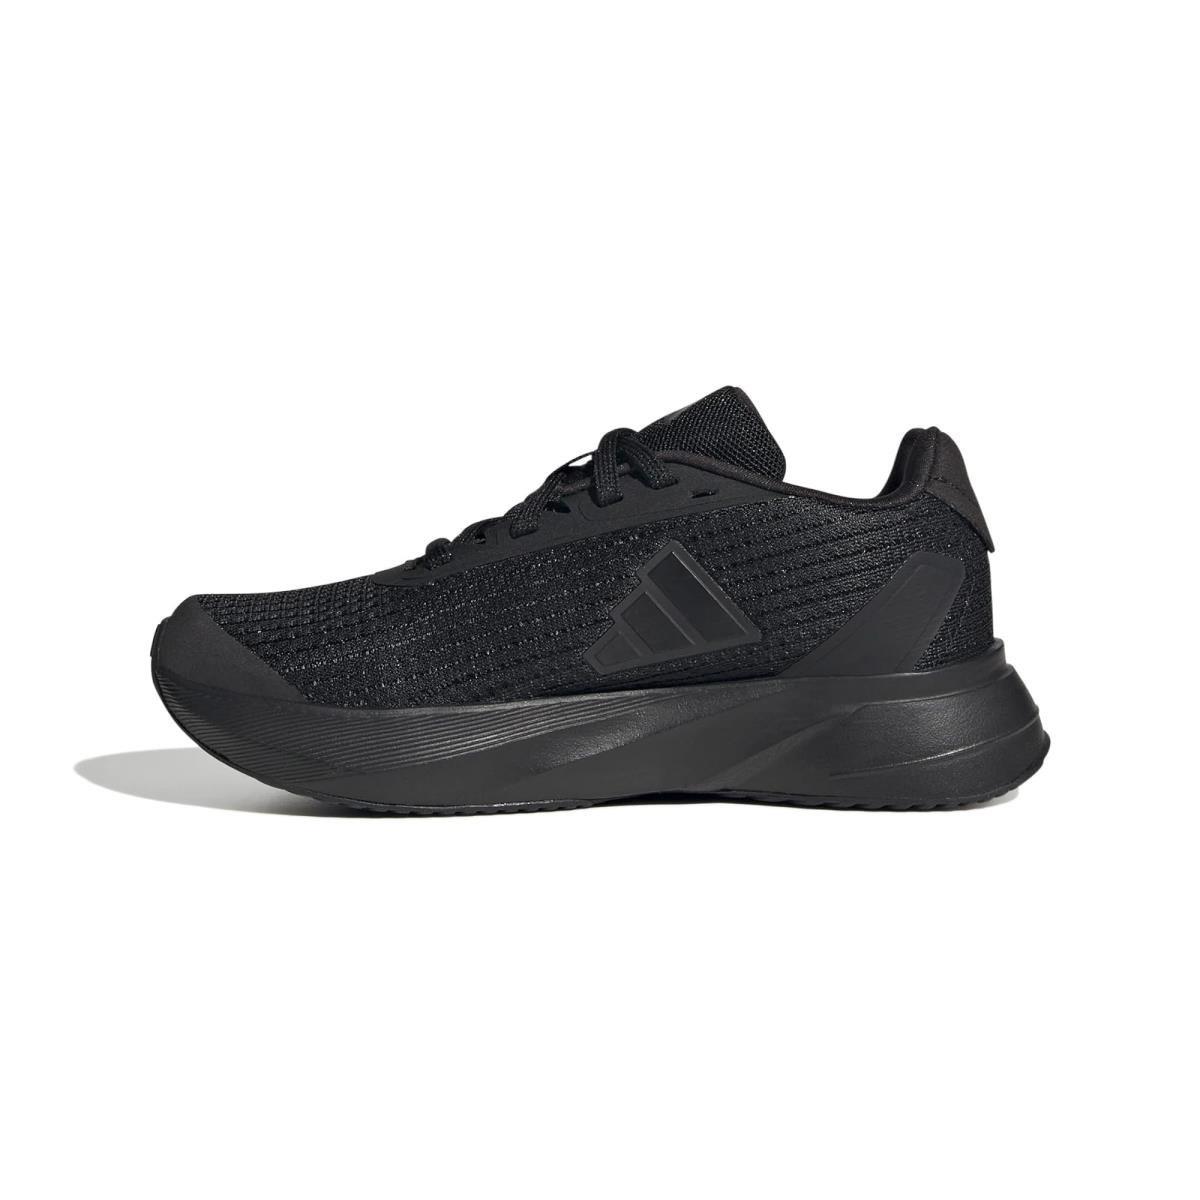 Adidas Unisex-child Duramo Sl Sneakers Little Big Black/Black/White